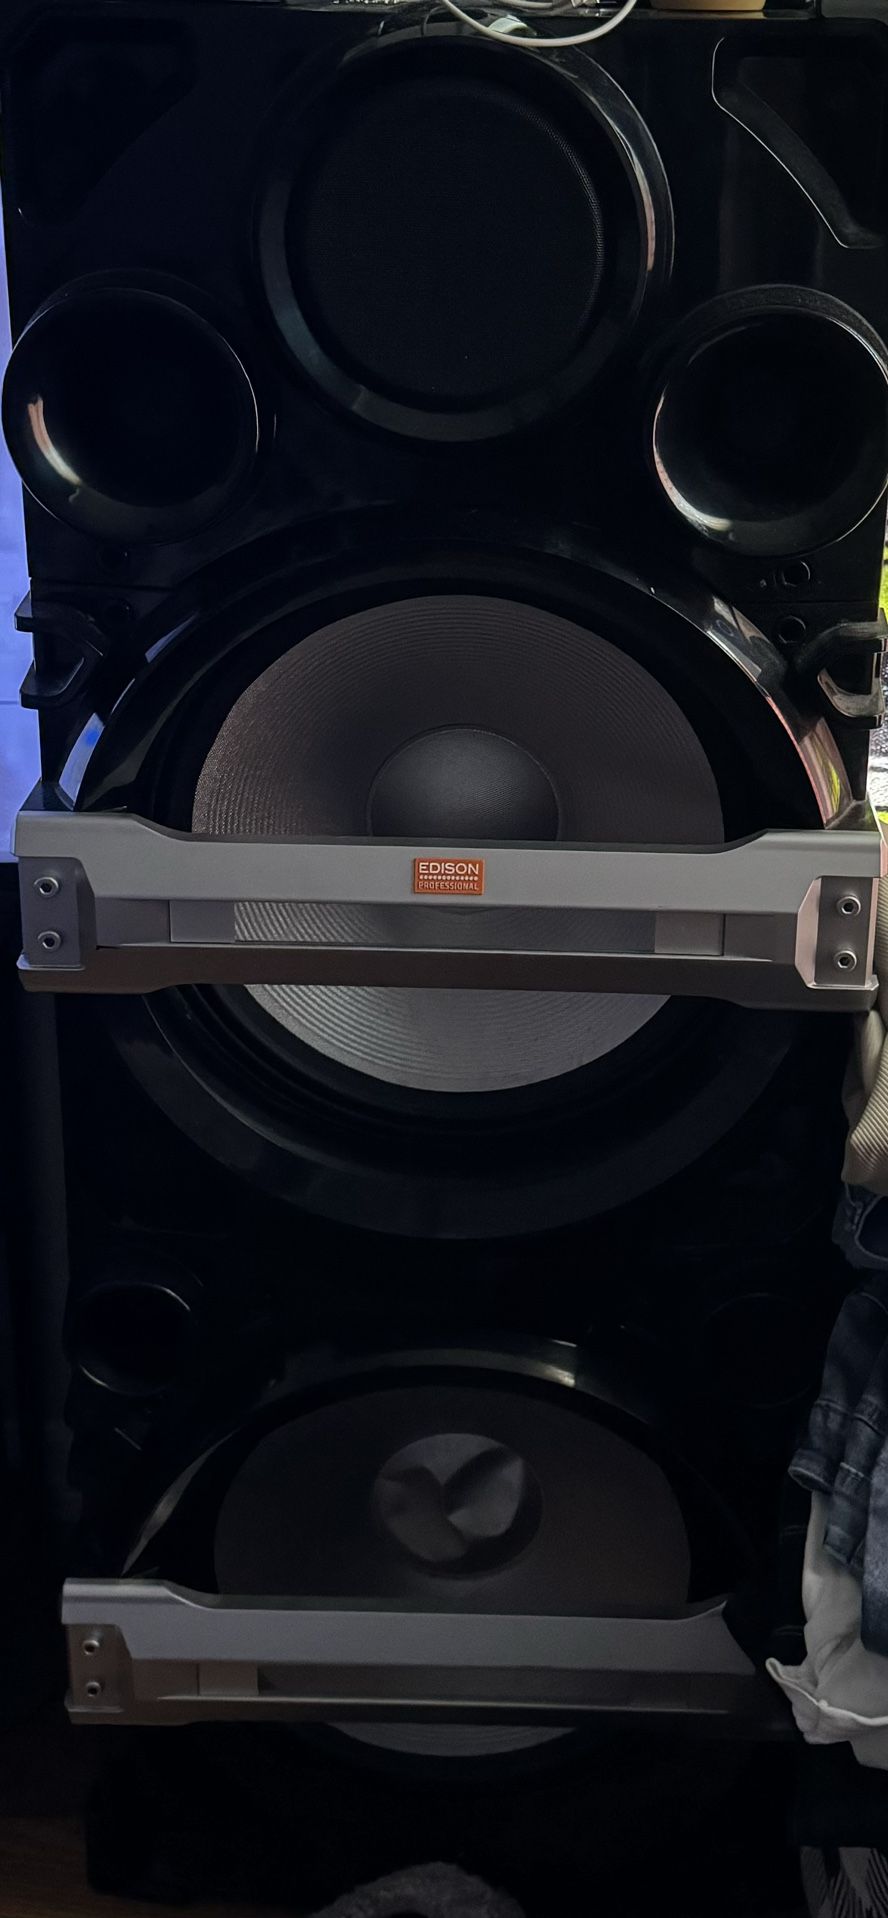 Edison Professional Sound System 